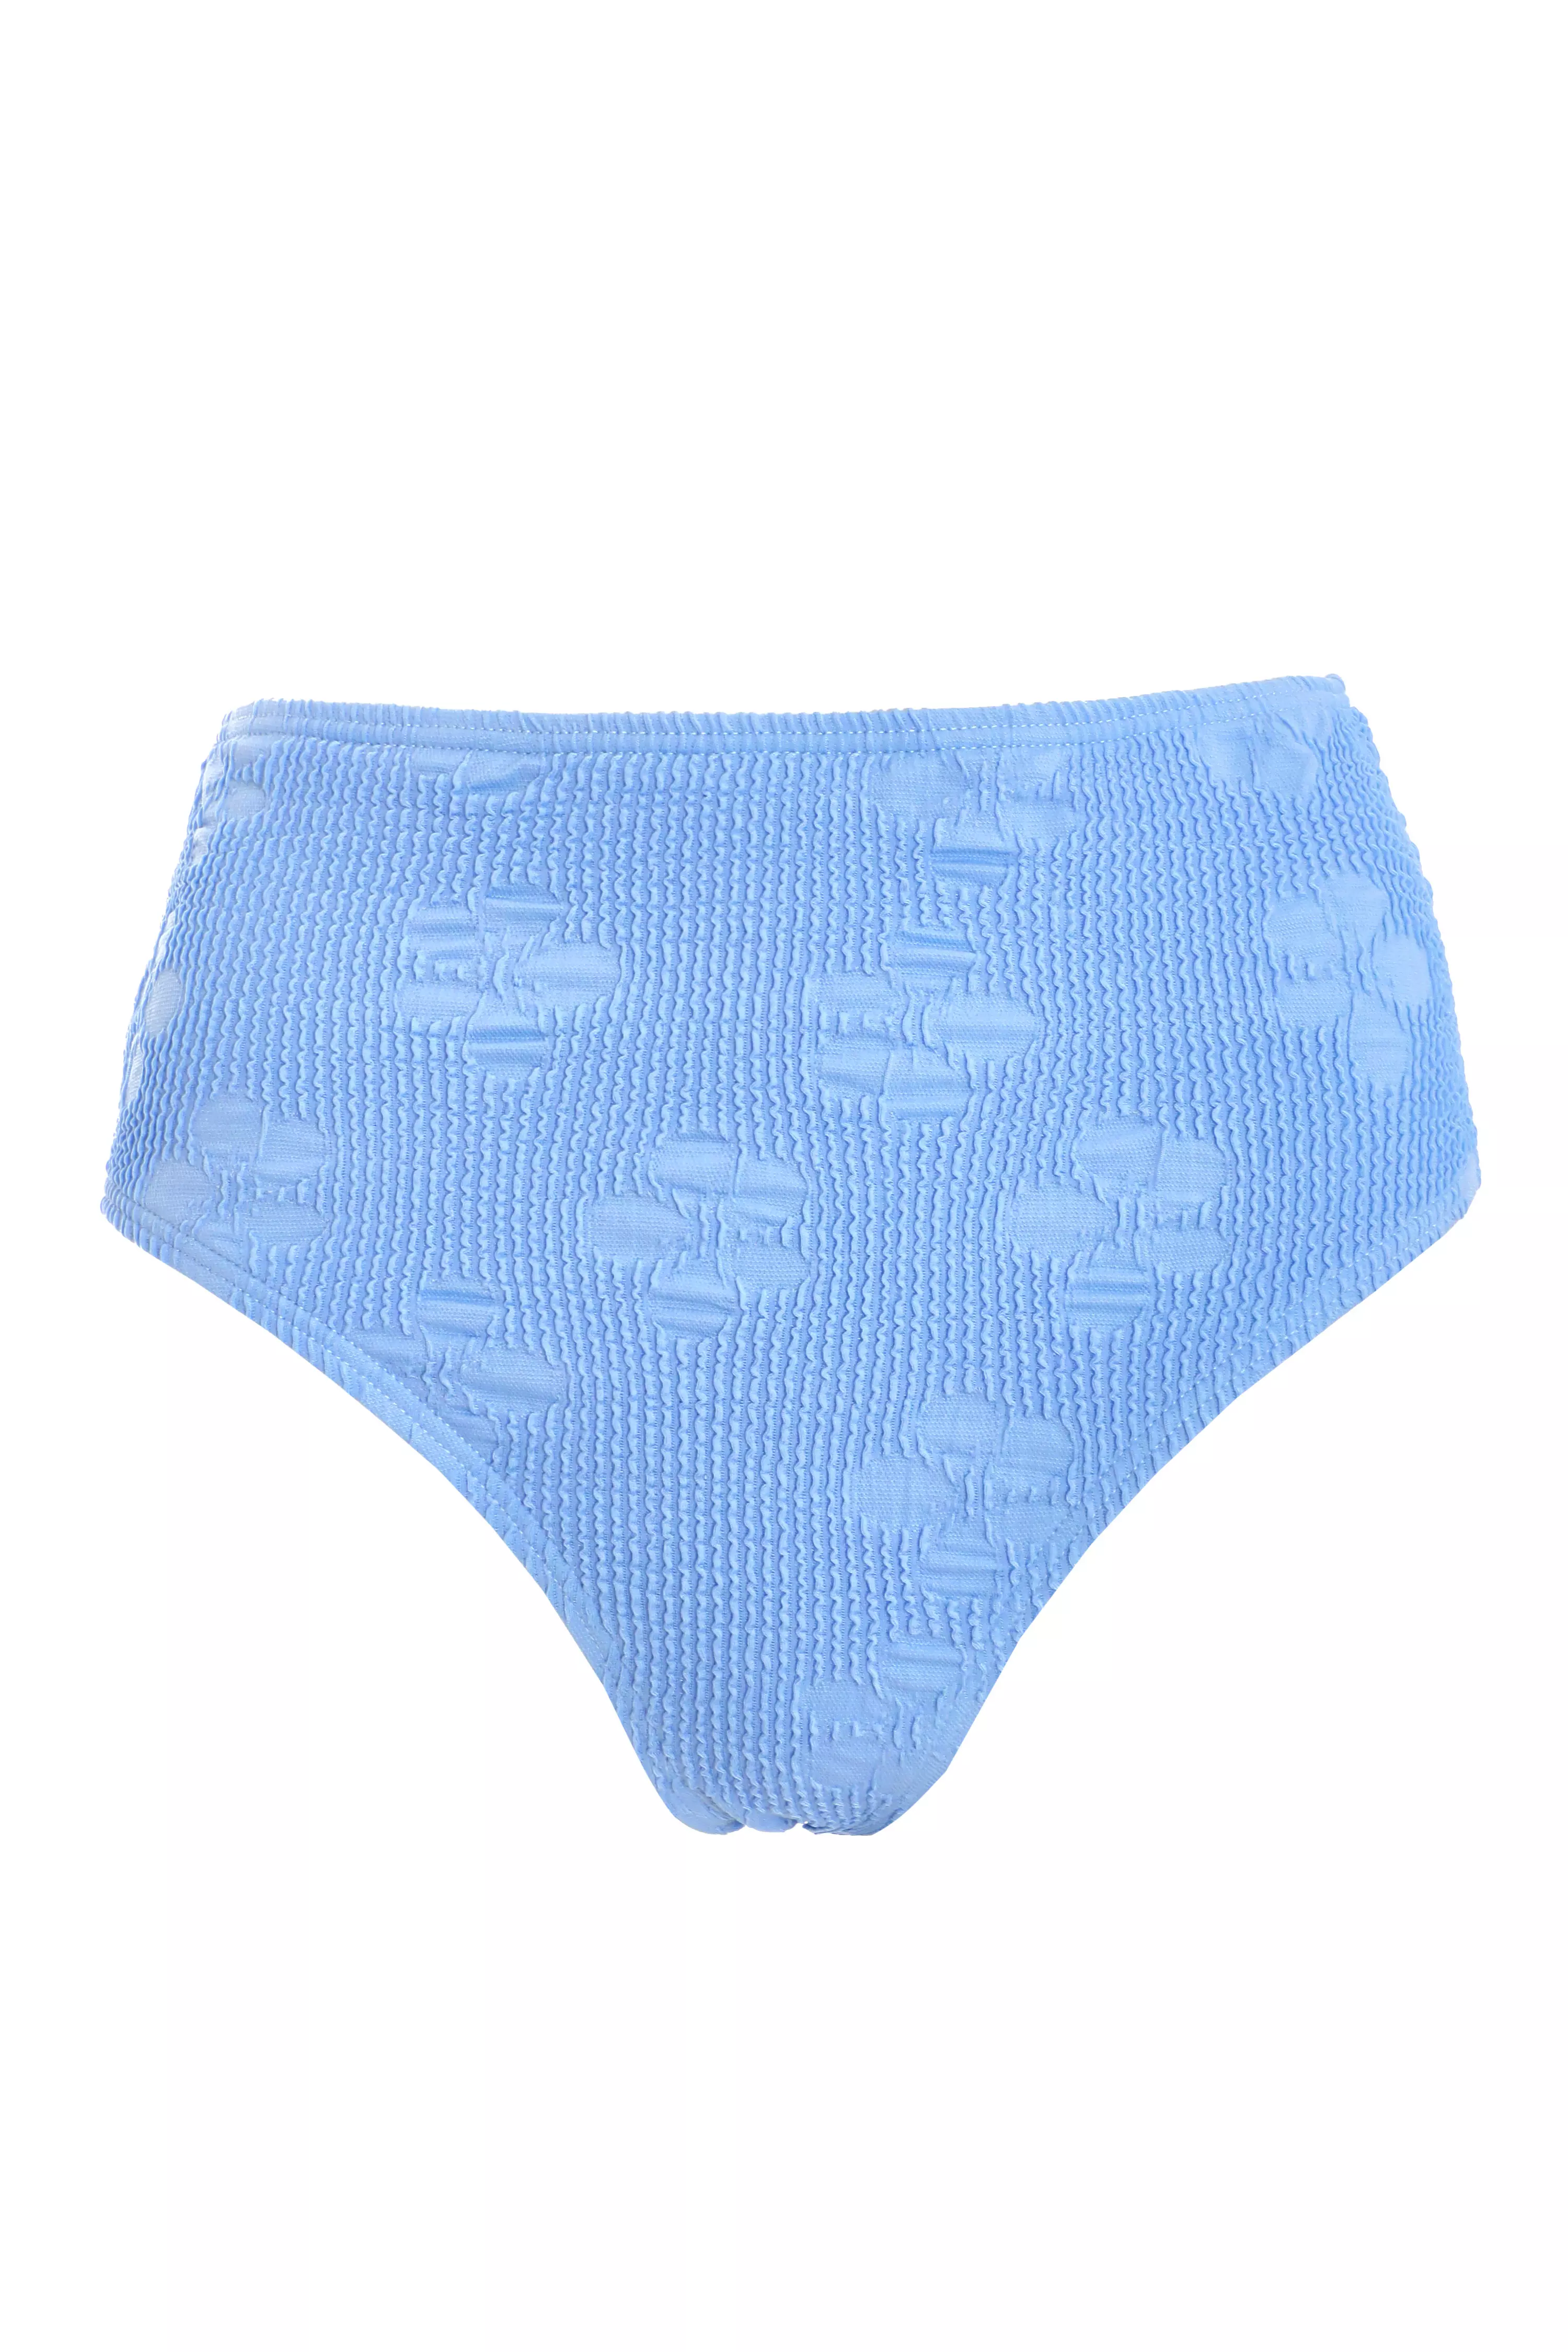 Blue Crinkle High Waist Bikini Bottoms